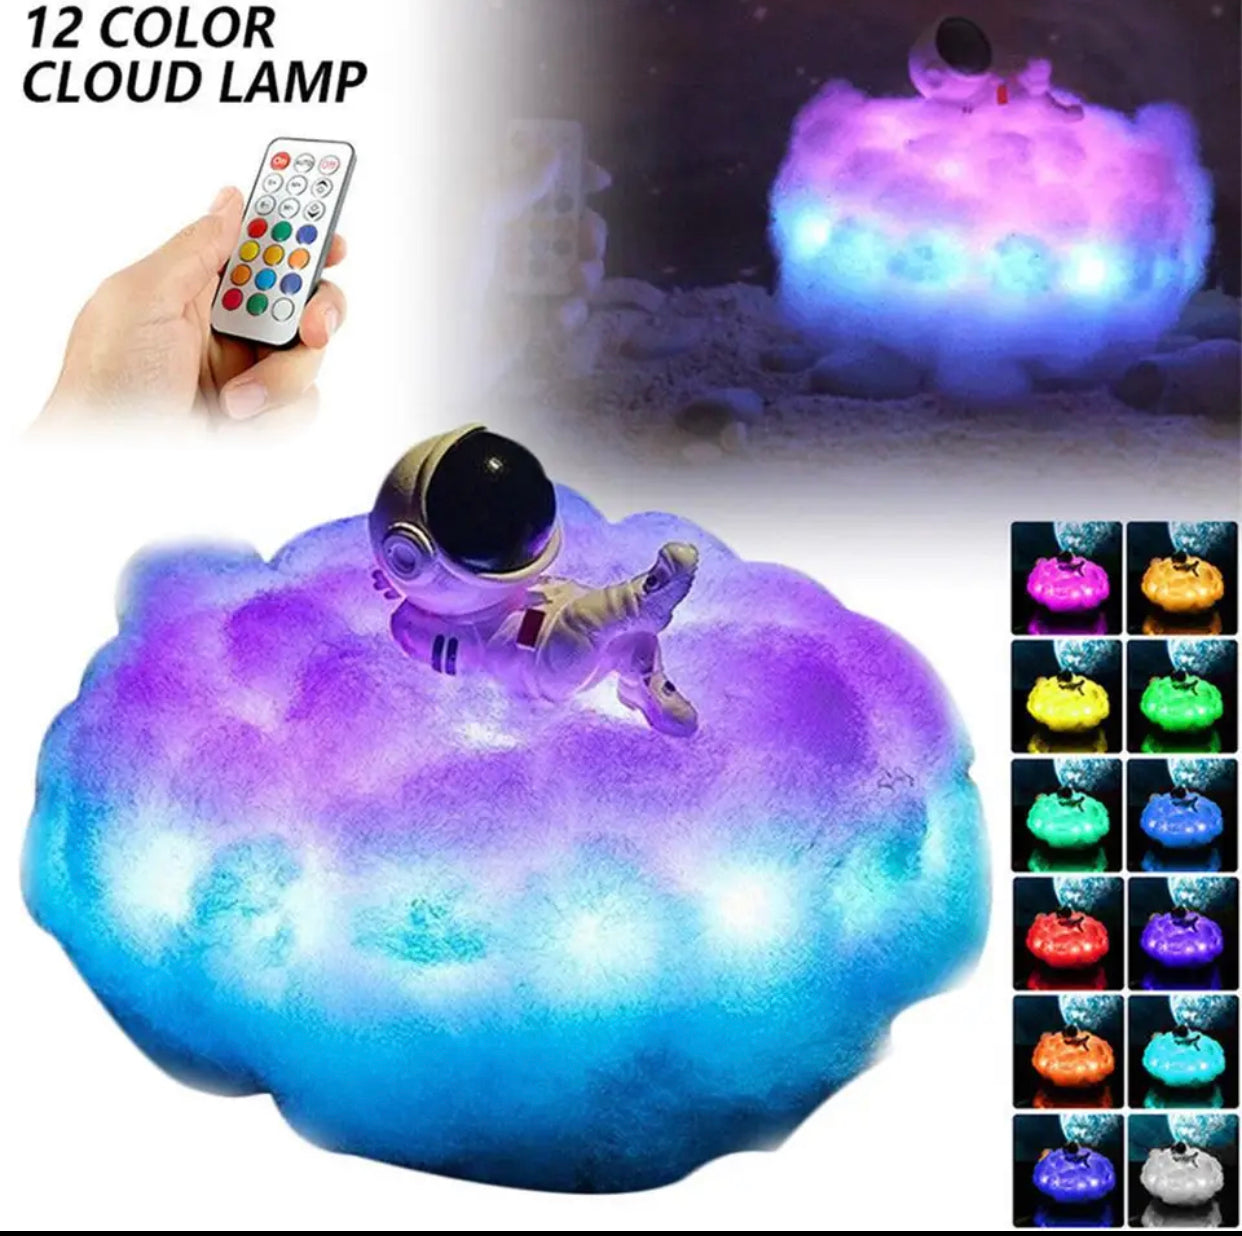 Limited Editiion LED Cloud Lamp